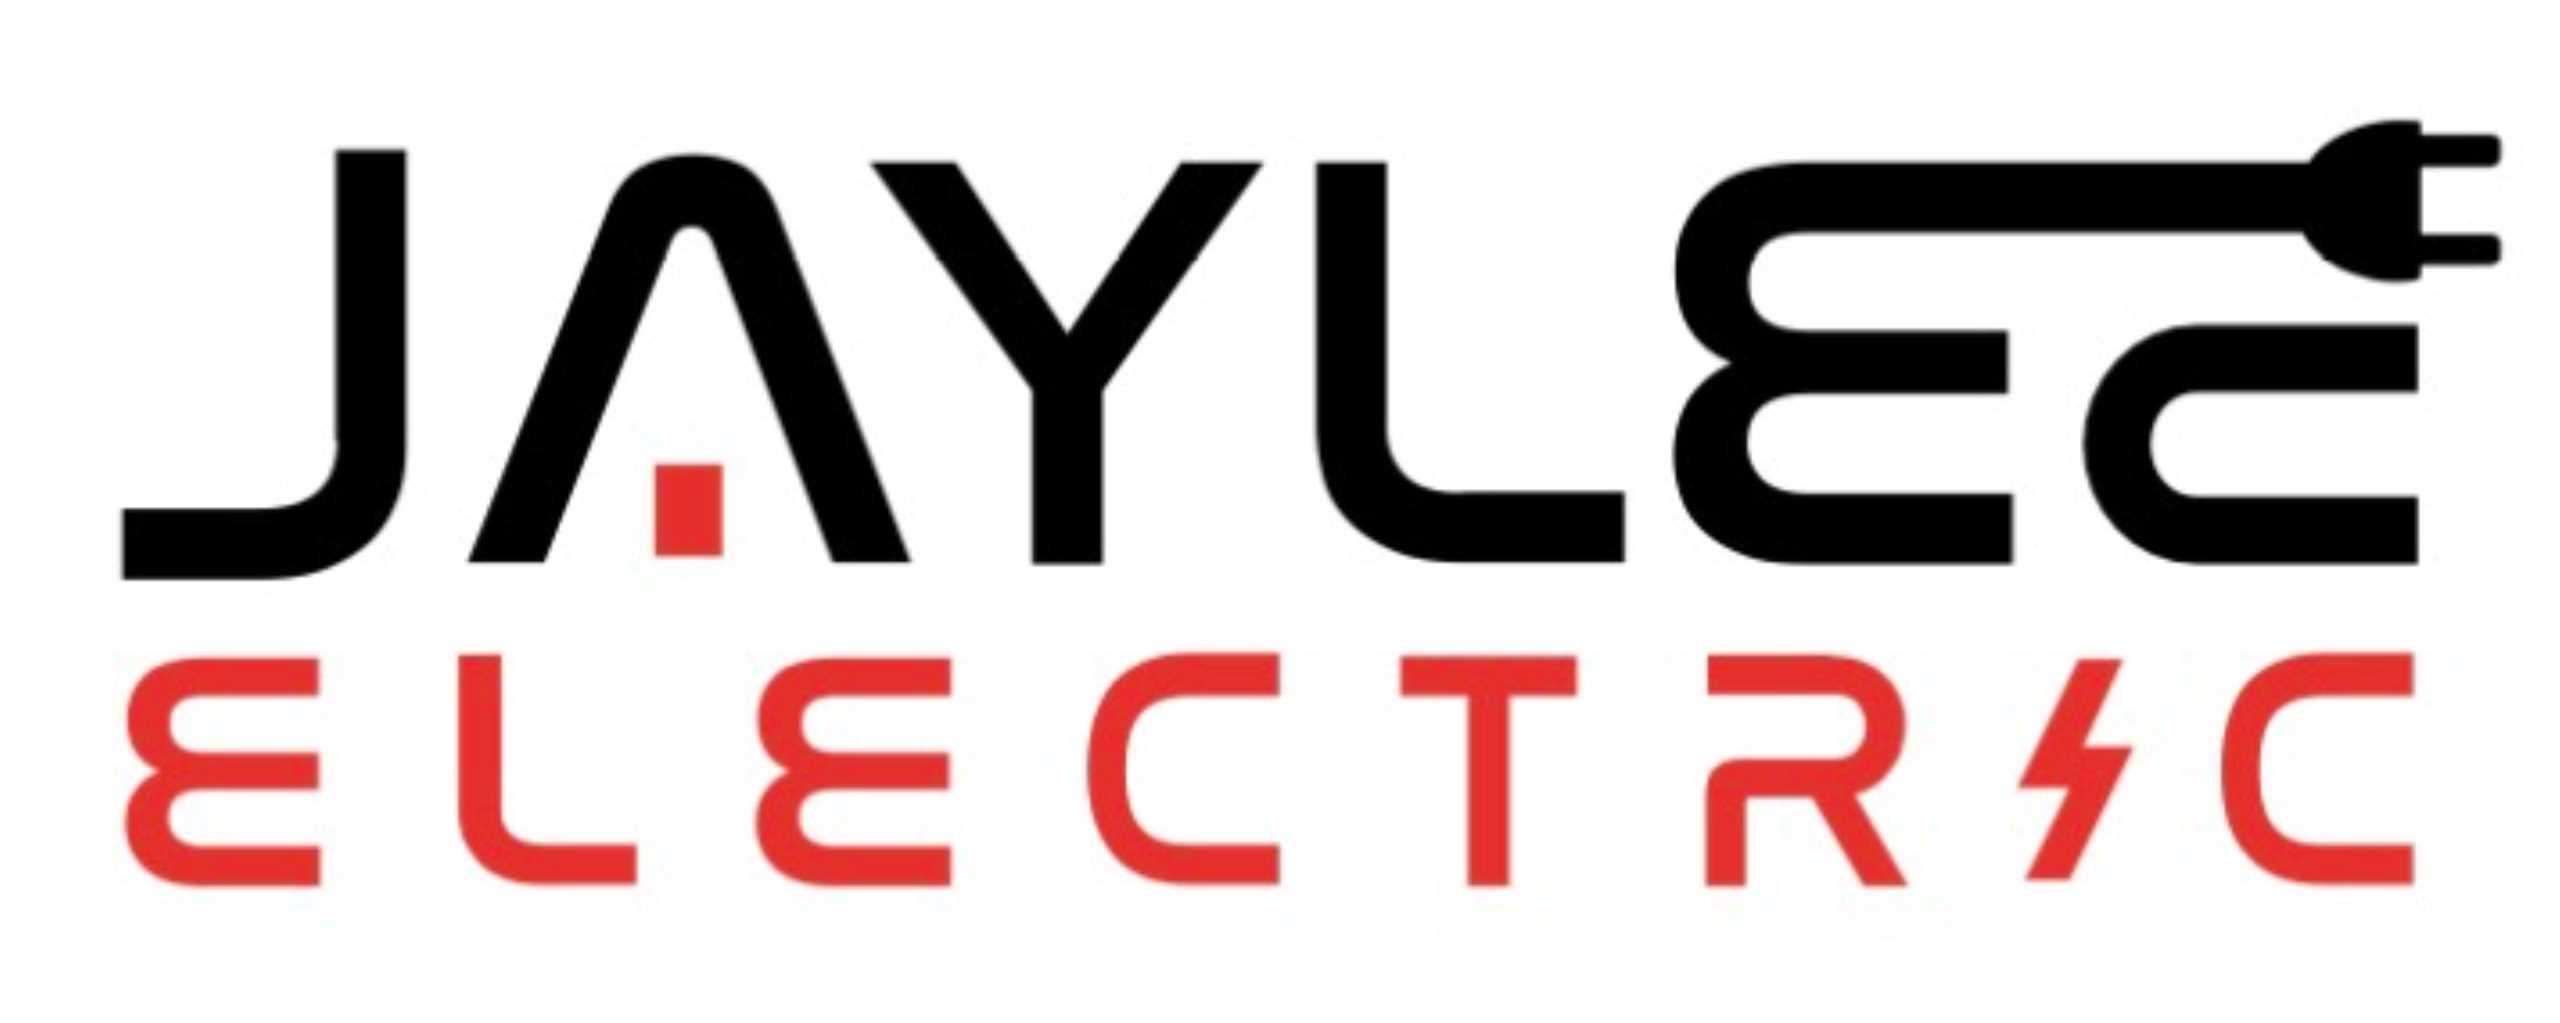 Jaylee Electric Logo